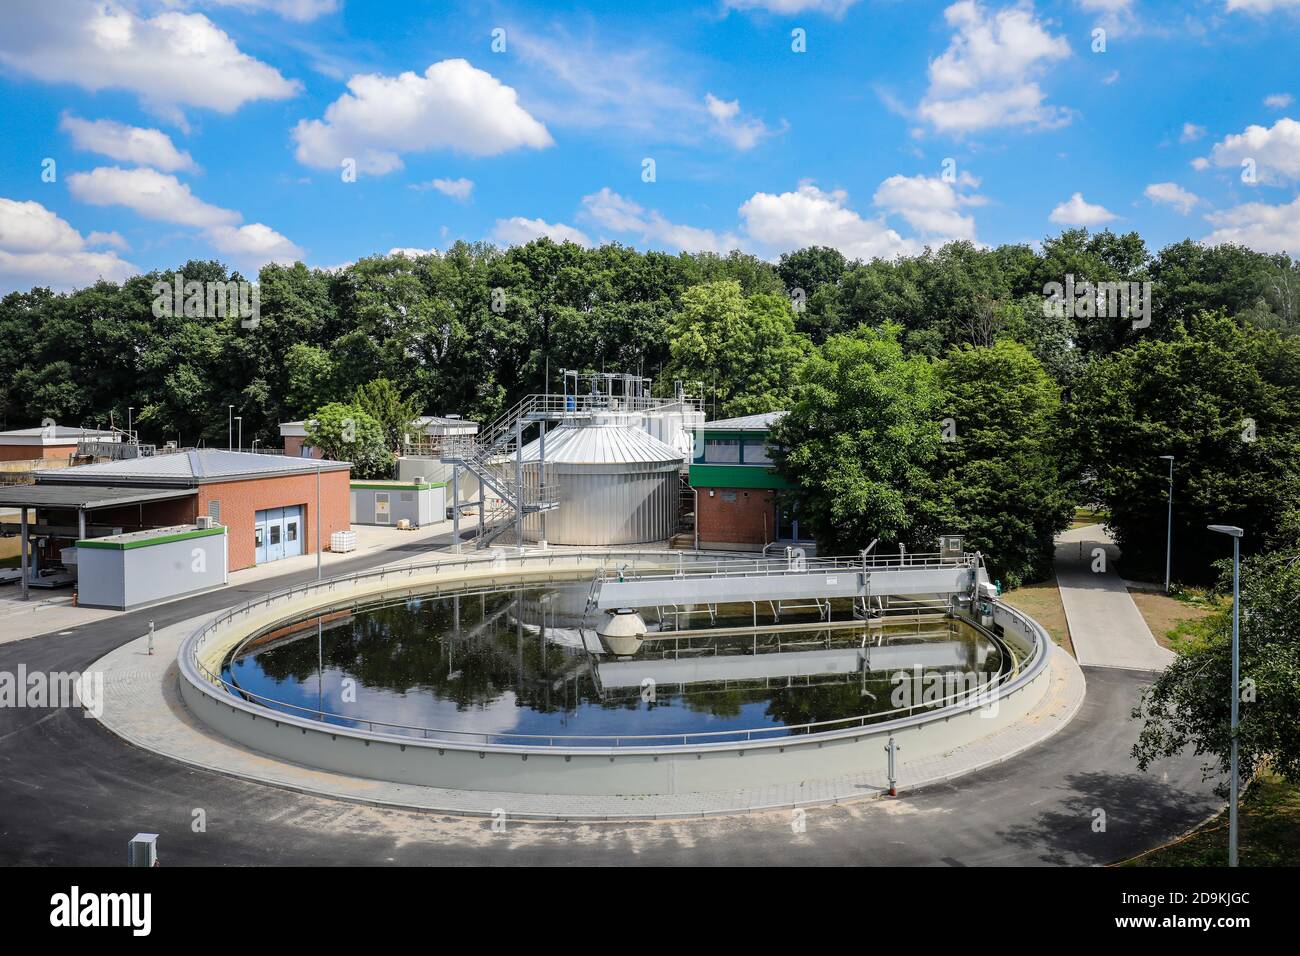 Wastewater treatment in the sewage treatment plant, Voerde, Lower Rhine, North Rhine-Westphalia, Germany Stock Photo